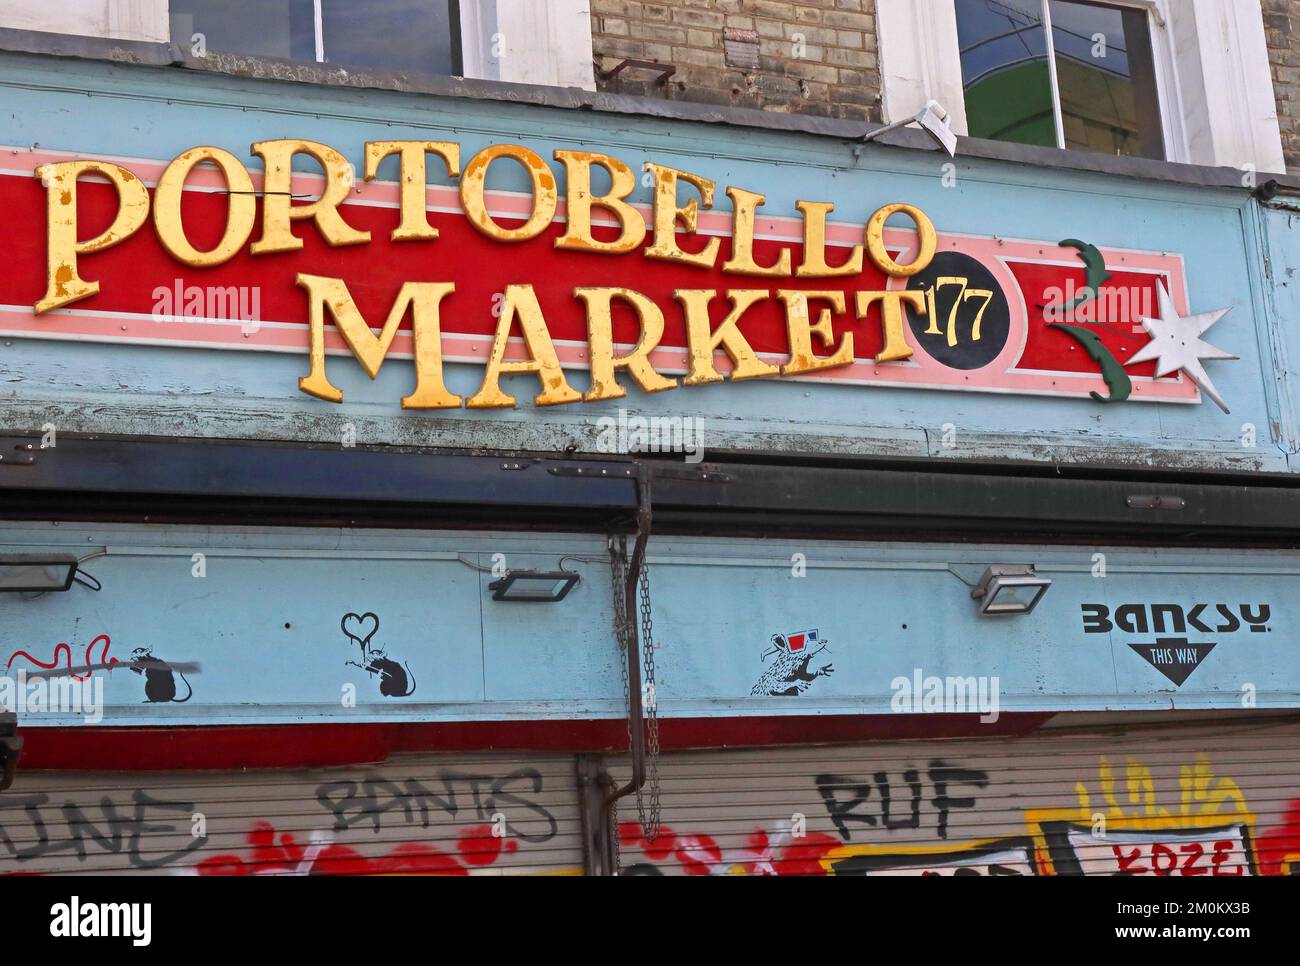 Portobello Market, 177 Portobello Road, Notting Hill, Londres, Royaume-Uni, W11 2DY Banque D'Images